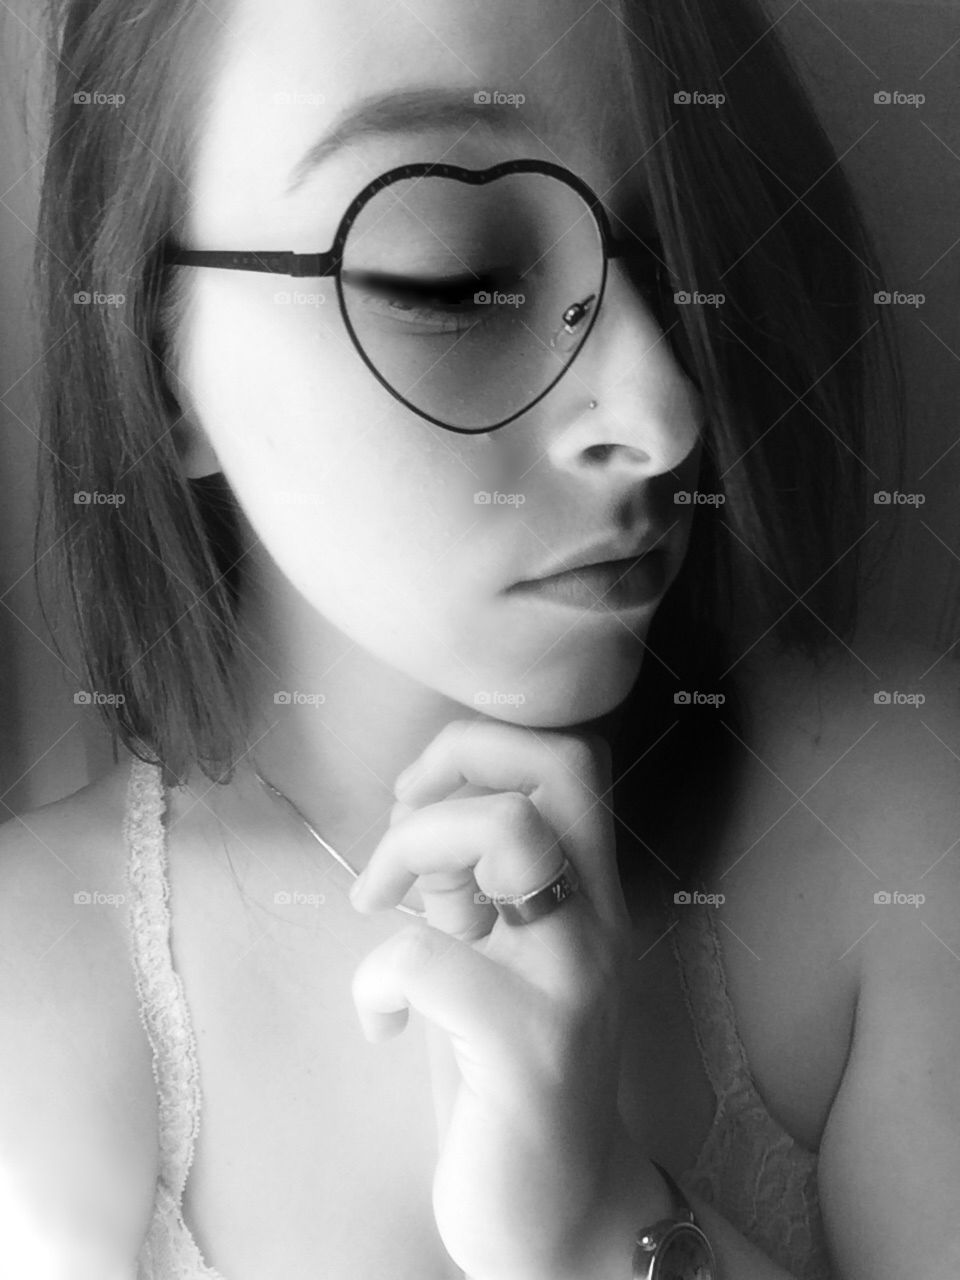 Heart Shaped Glasses. A self portrait.